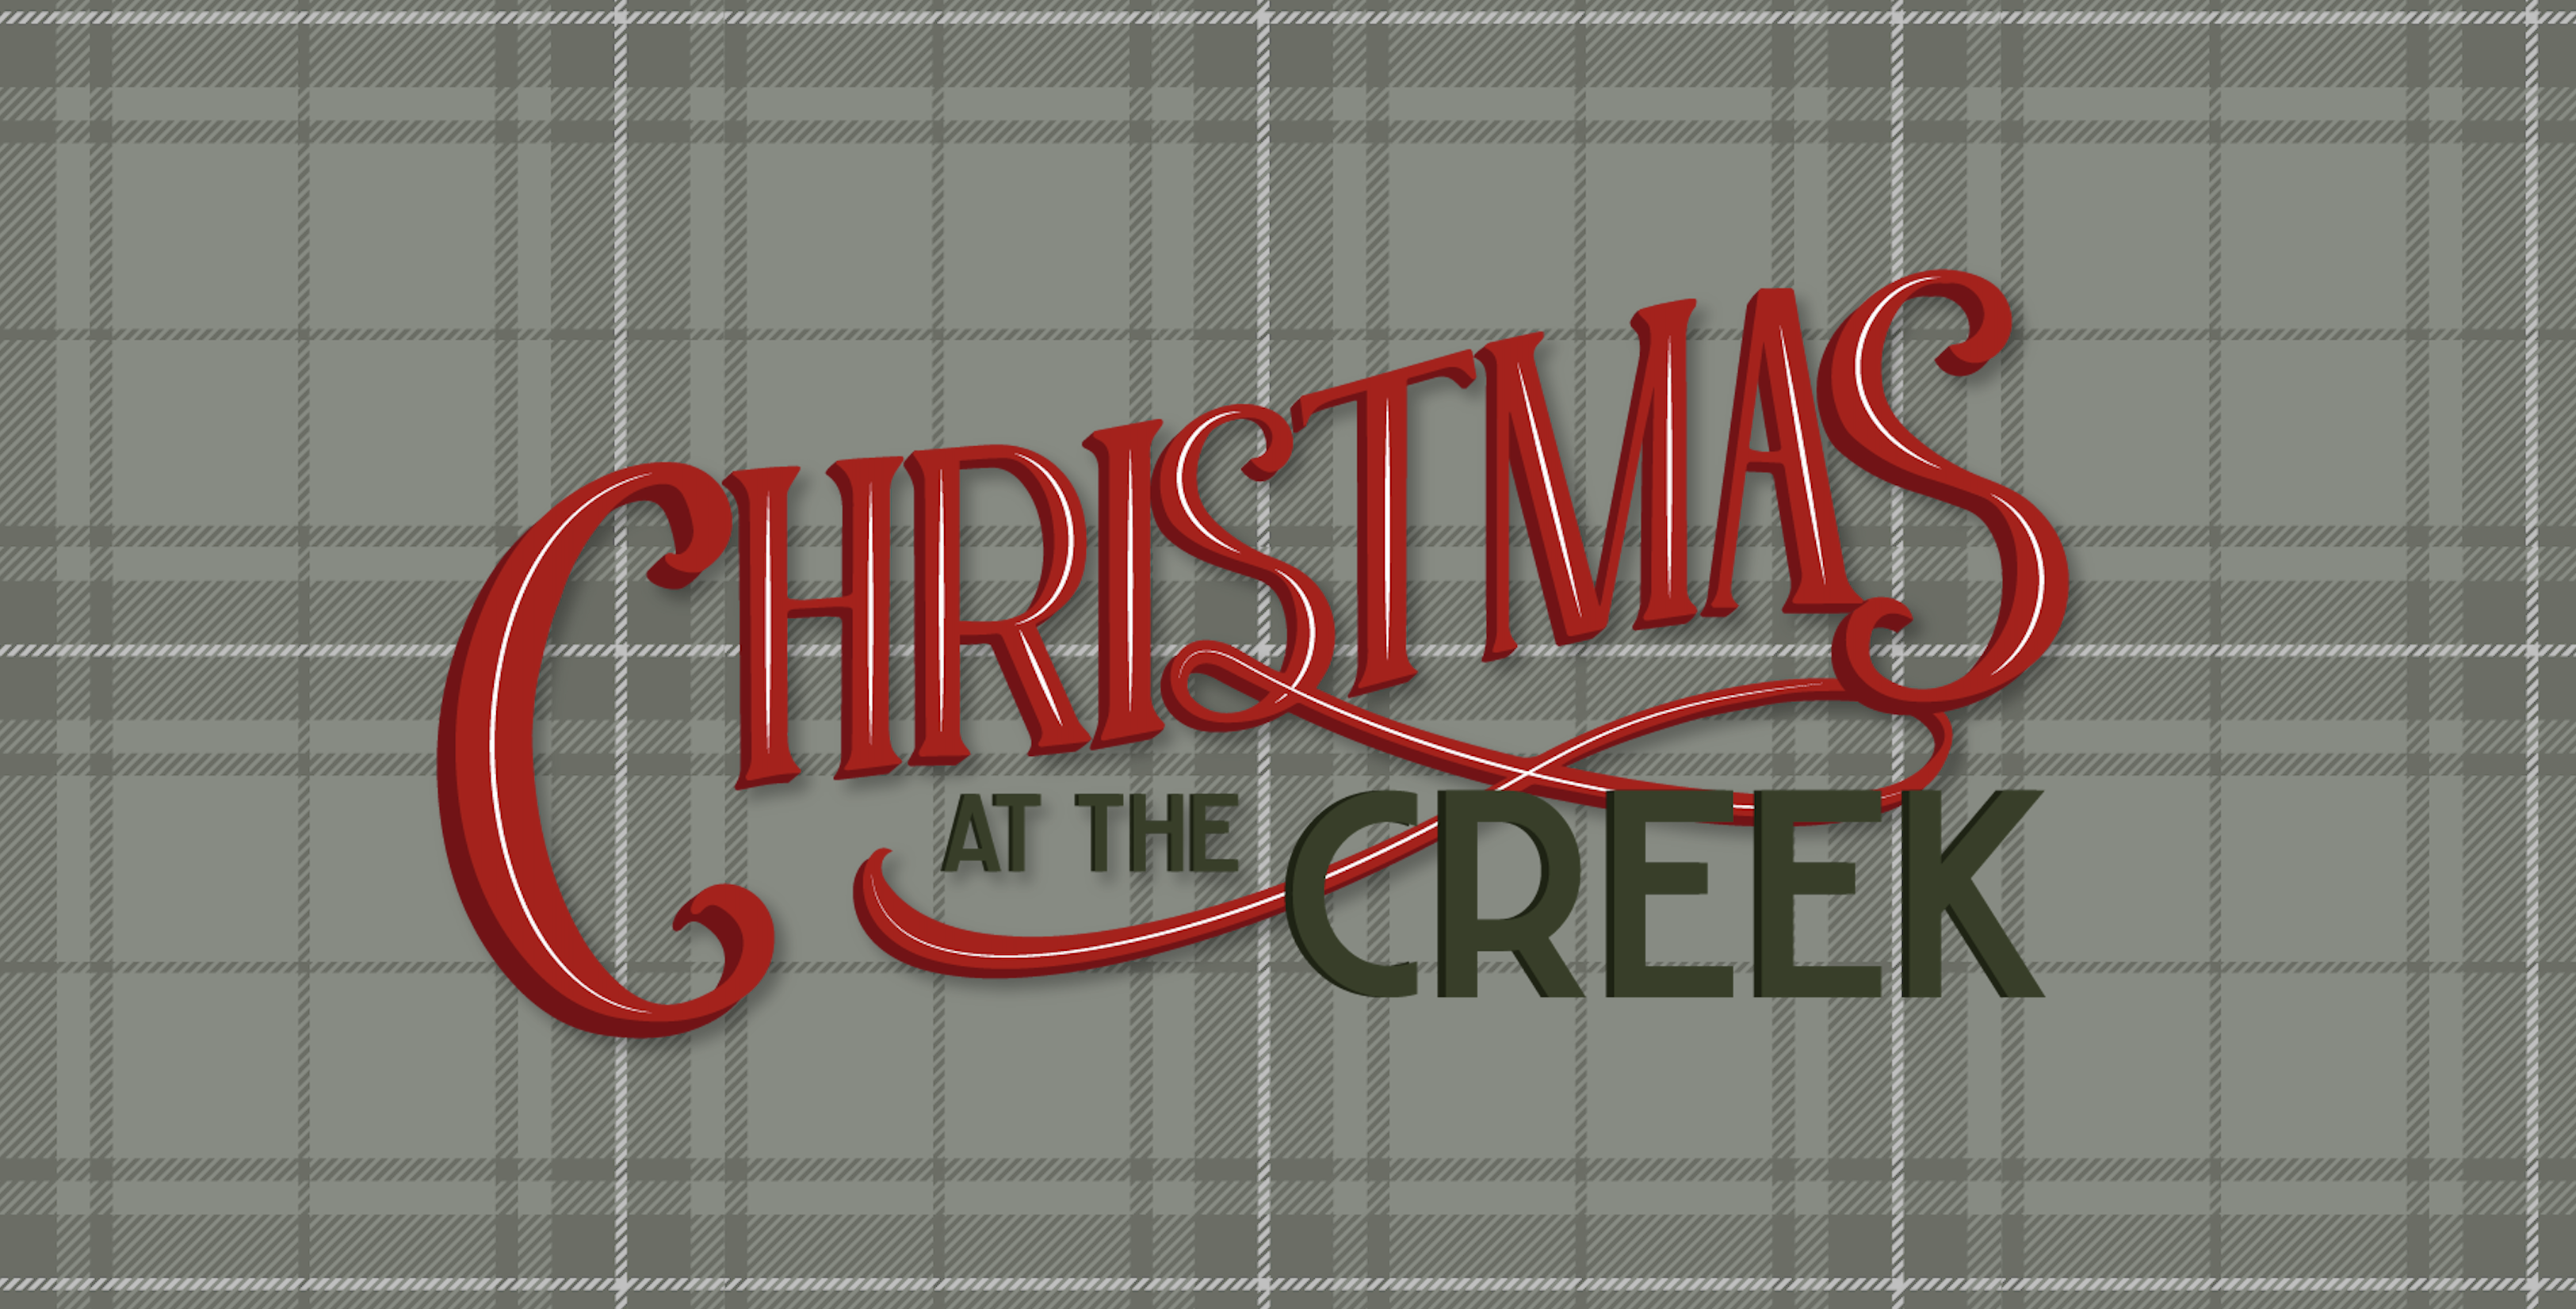 Cottonwood Creek - Christmas at the Creek